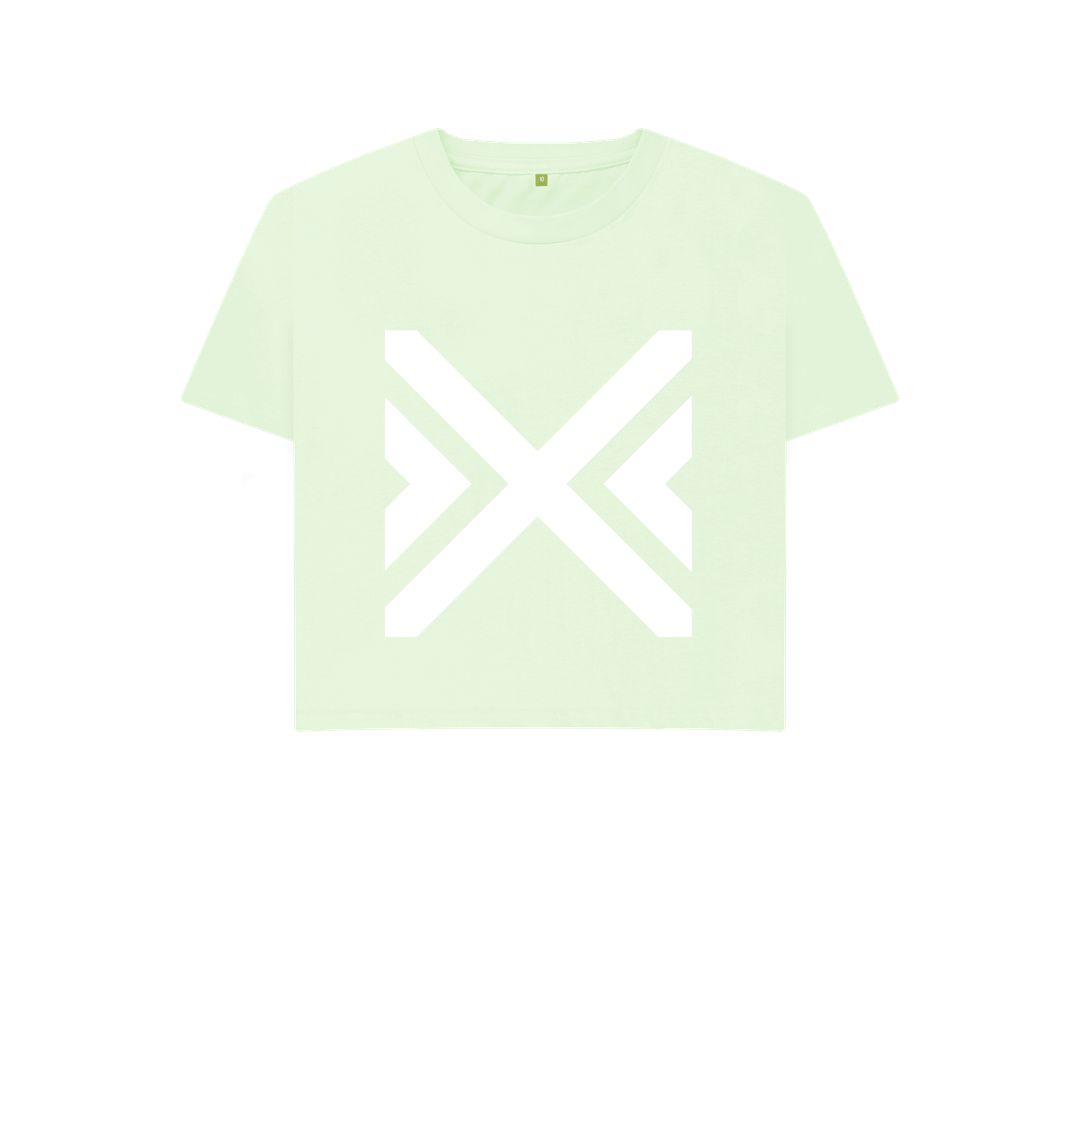 Pastel Green Cross T-shirts - Women's Boxy Tees